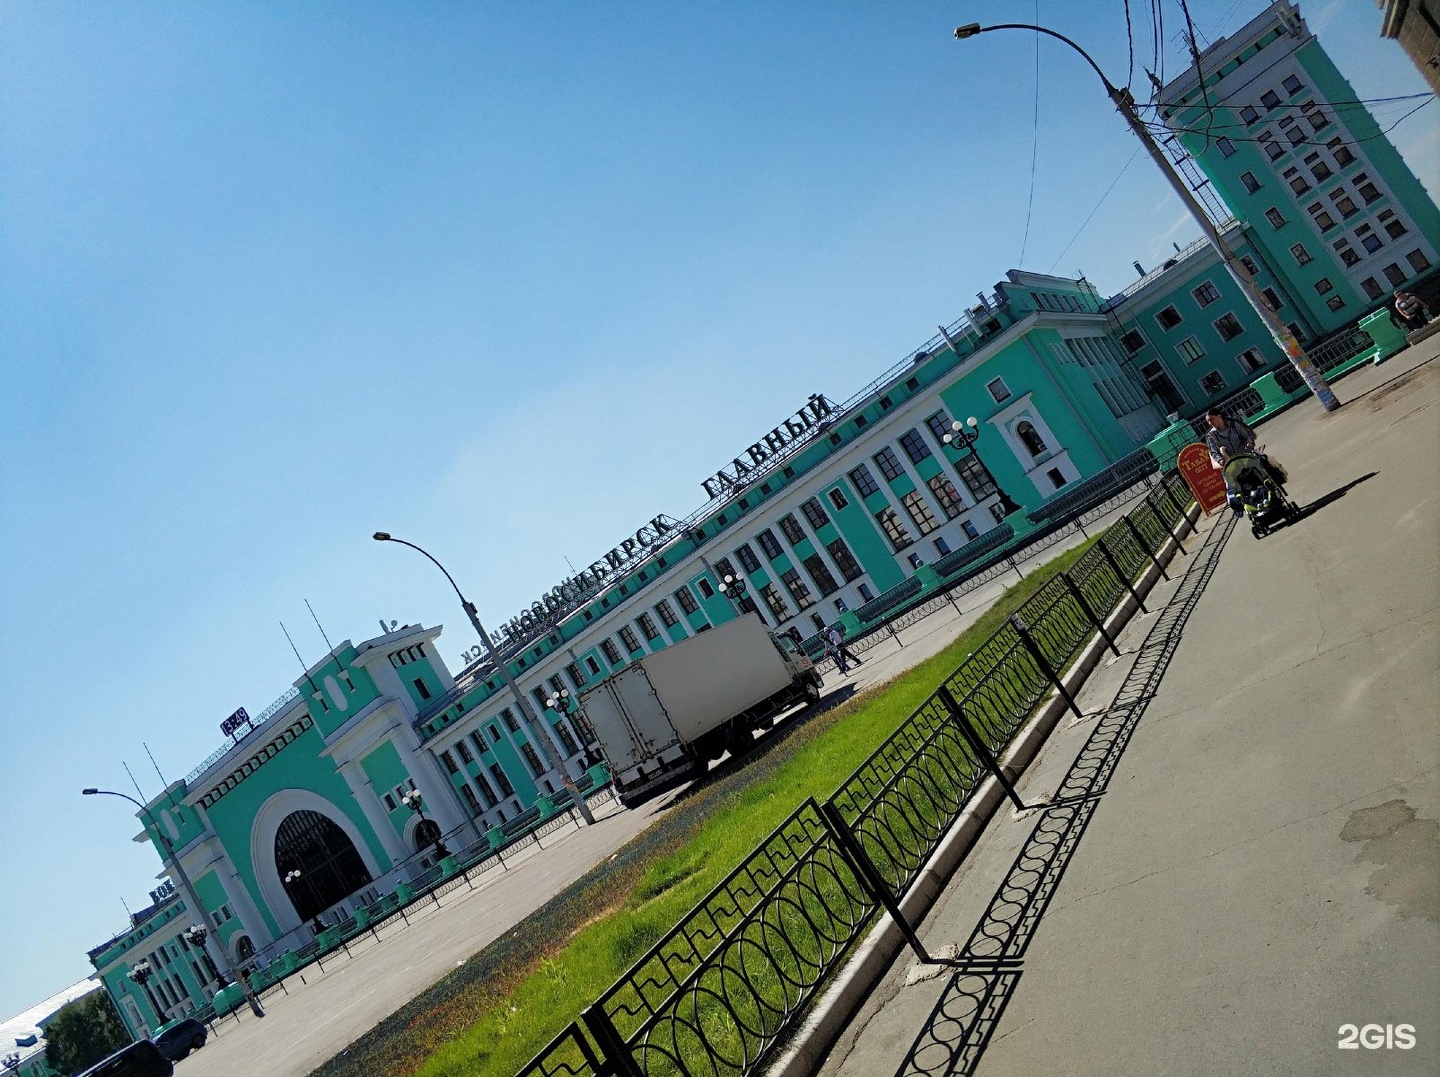 новосибирск вокзал внутри